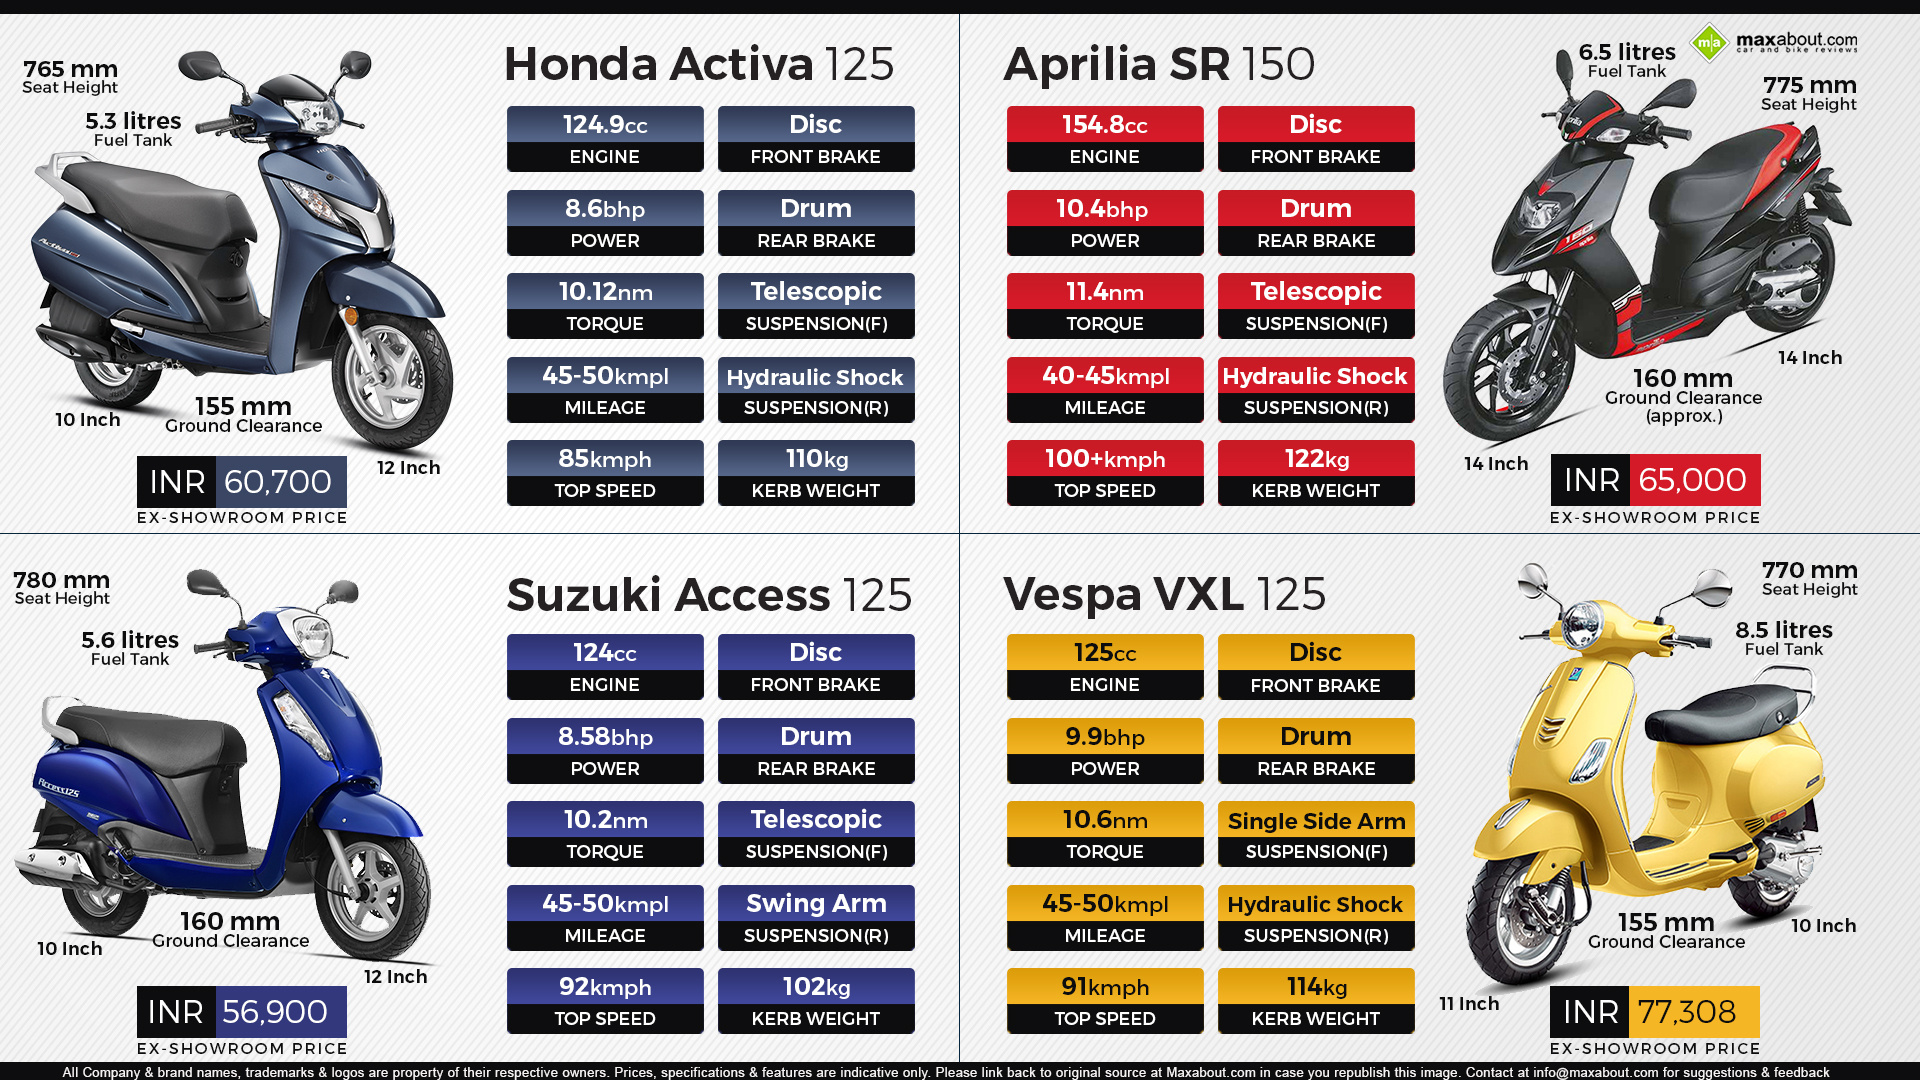 Honda Activa Vs Aprilia Sr Suzuki Access